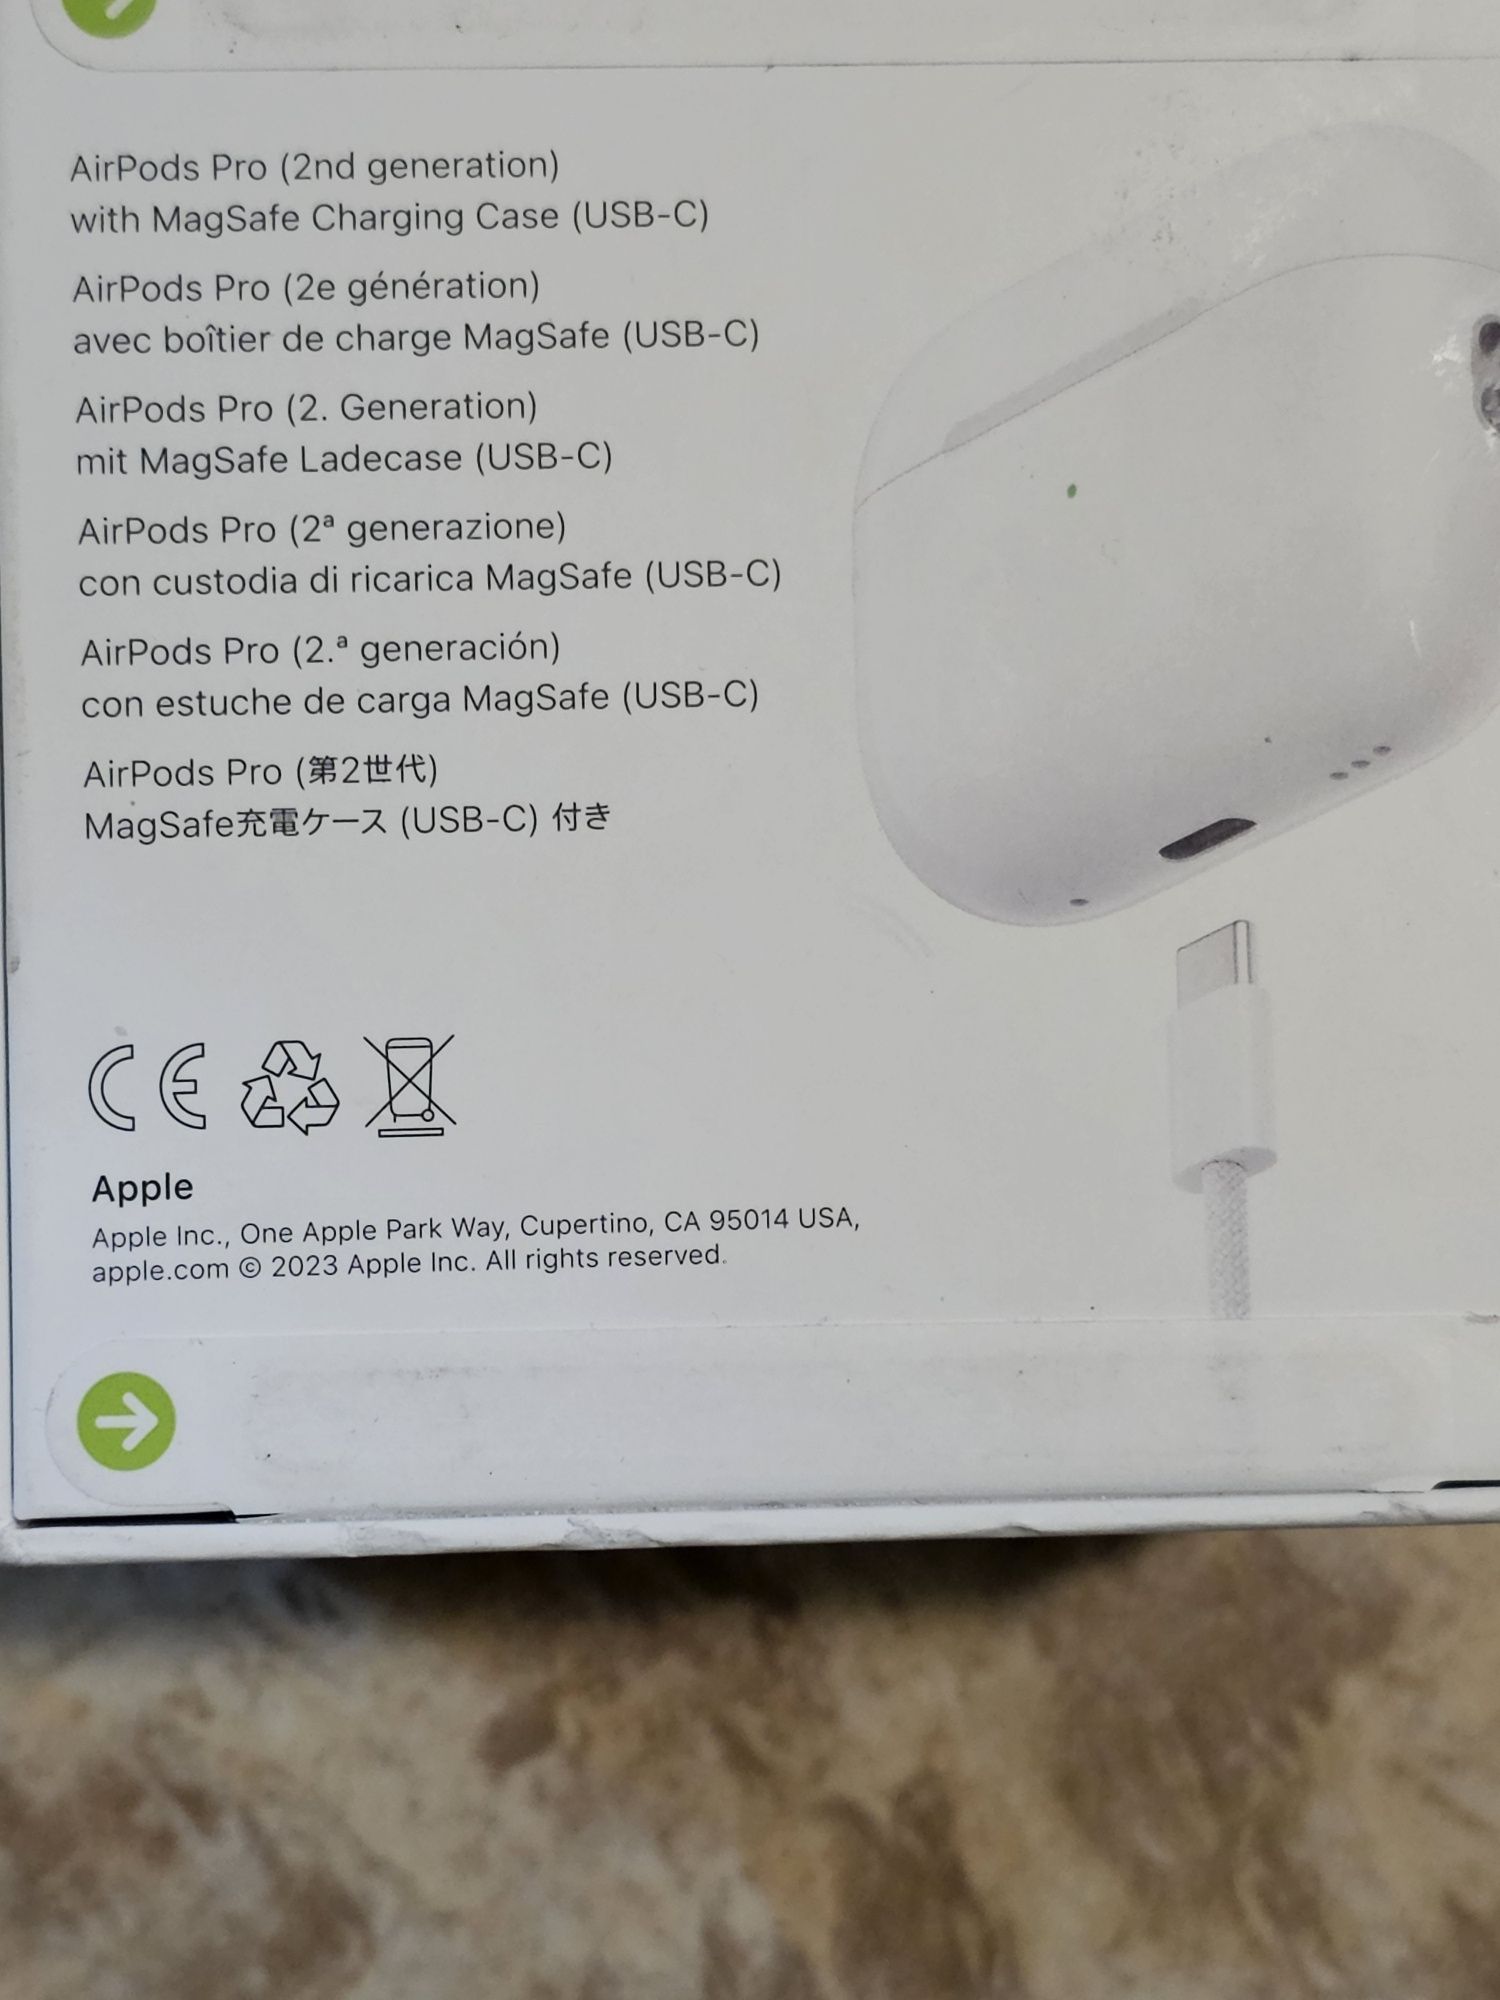 Casti Apple Airpods Pro (2nd Generation) Carcasa MagSafe (USB-C) - 202